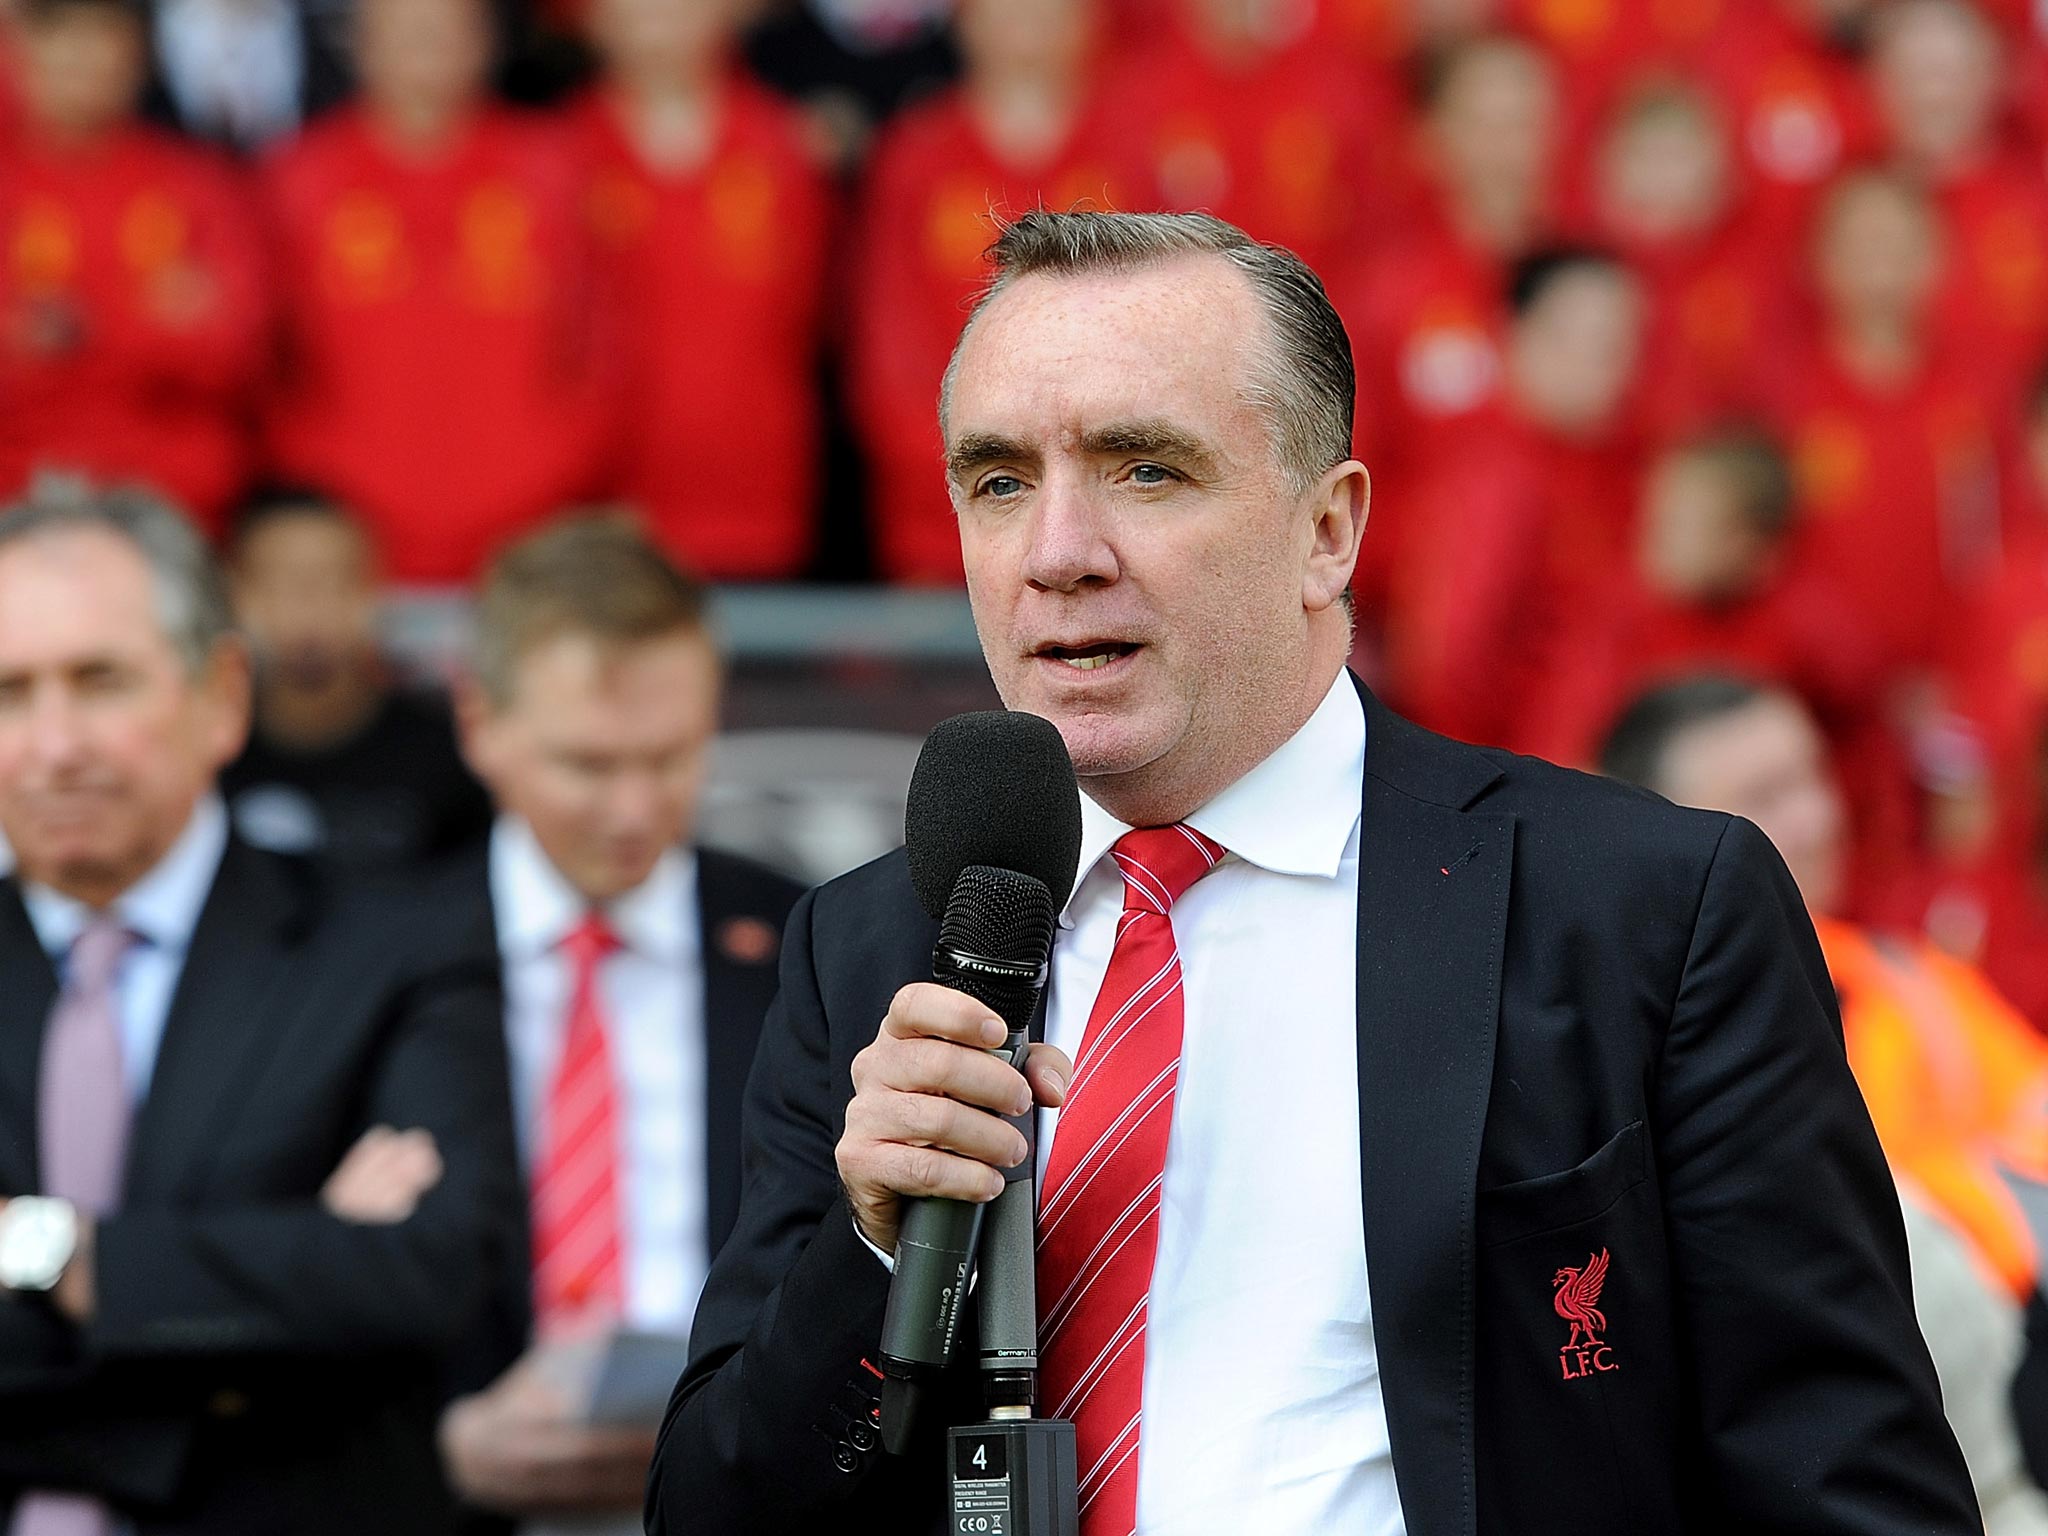 Liverpool's managing director Ian Ayre speaks at the Hillsborough memorial service at Anfield